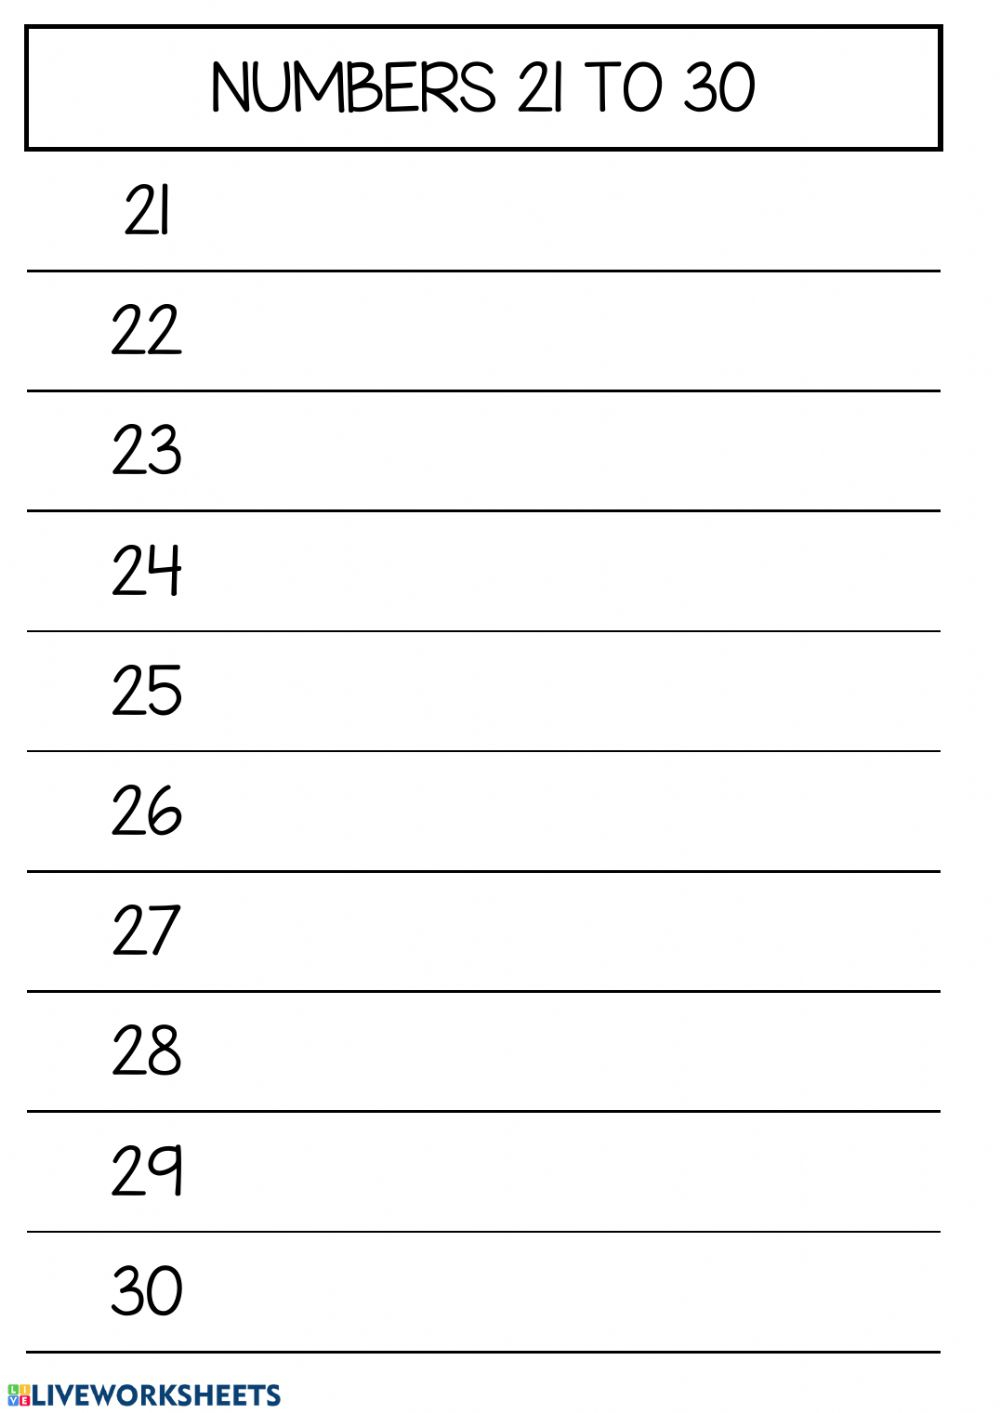 tracing-numbers-20-30-worksheets-printable-tracing-numbers